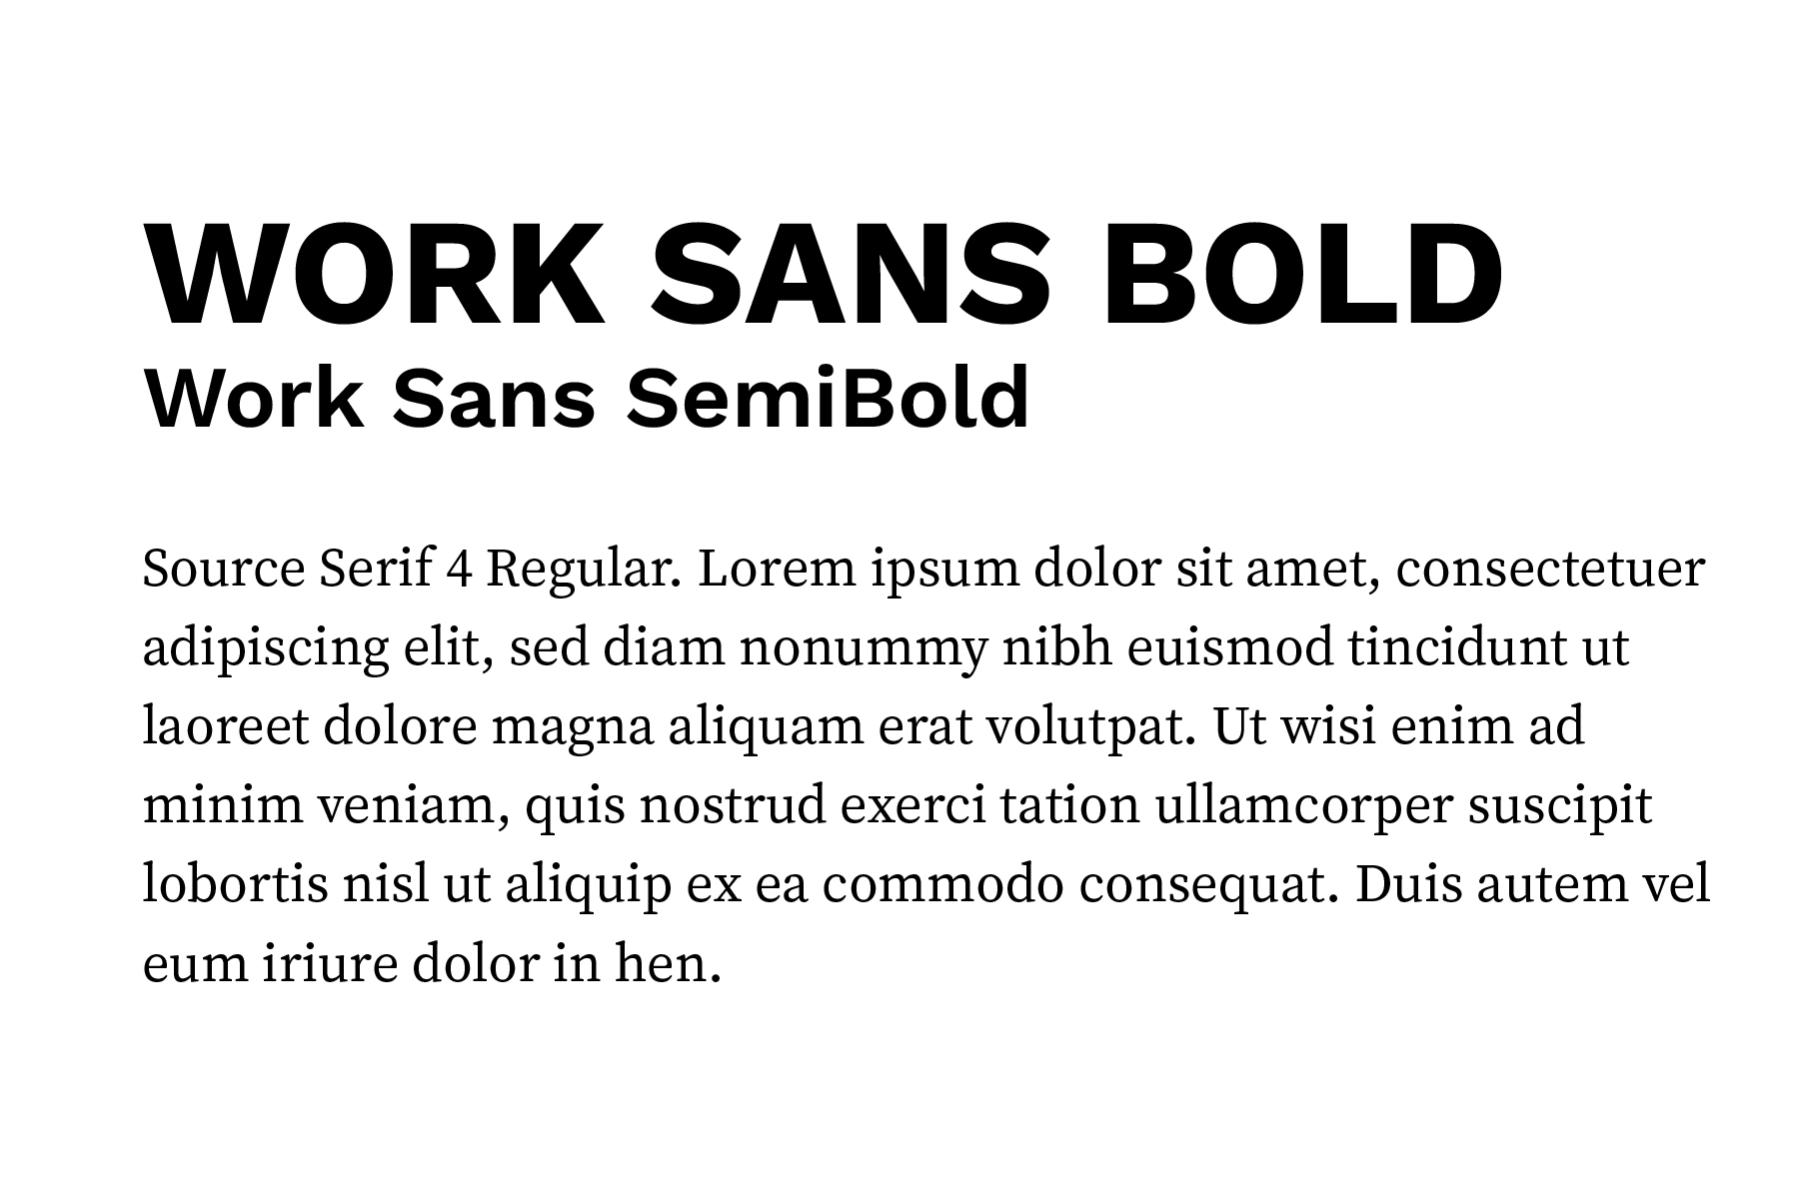 Typeface example showing Work Sans headline, Work Sans subhead, and Source Serif body copy